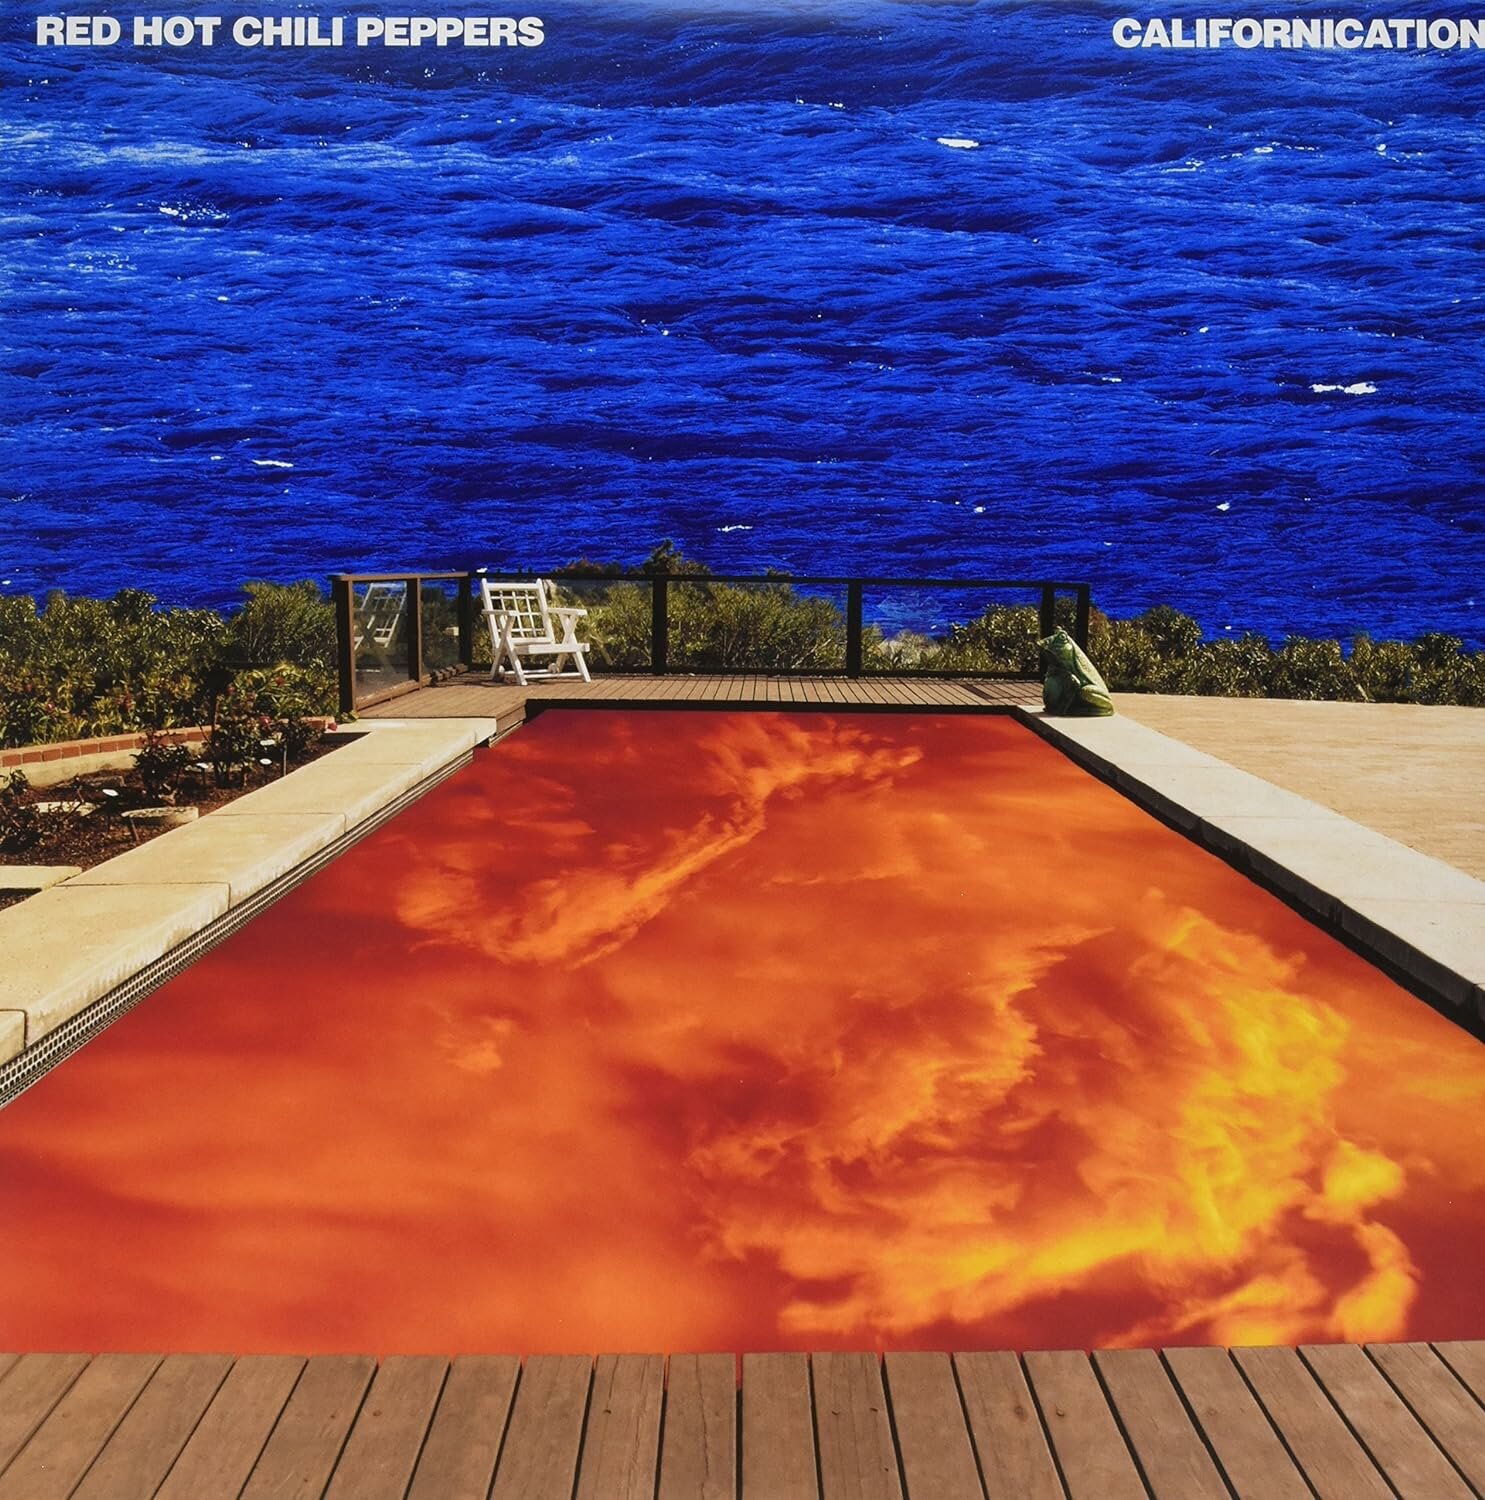 Виниловая пластинка Red Hot Chili Peppers 'Californication' (2LP). (Запечатана SS)